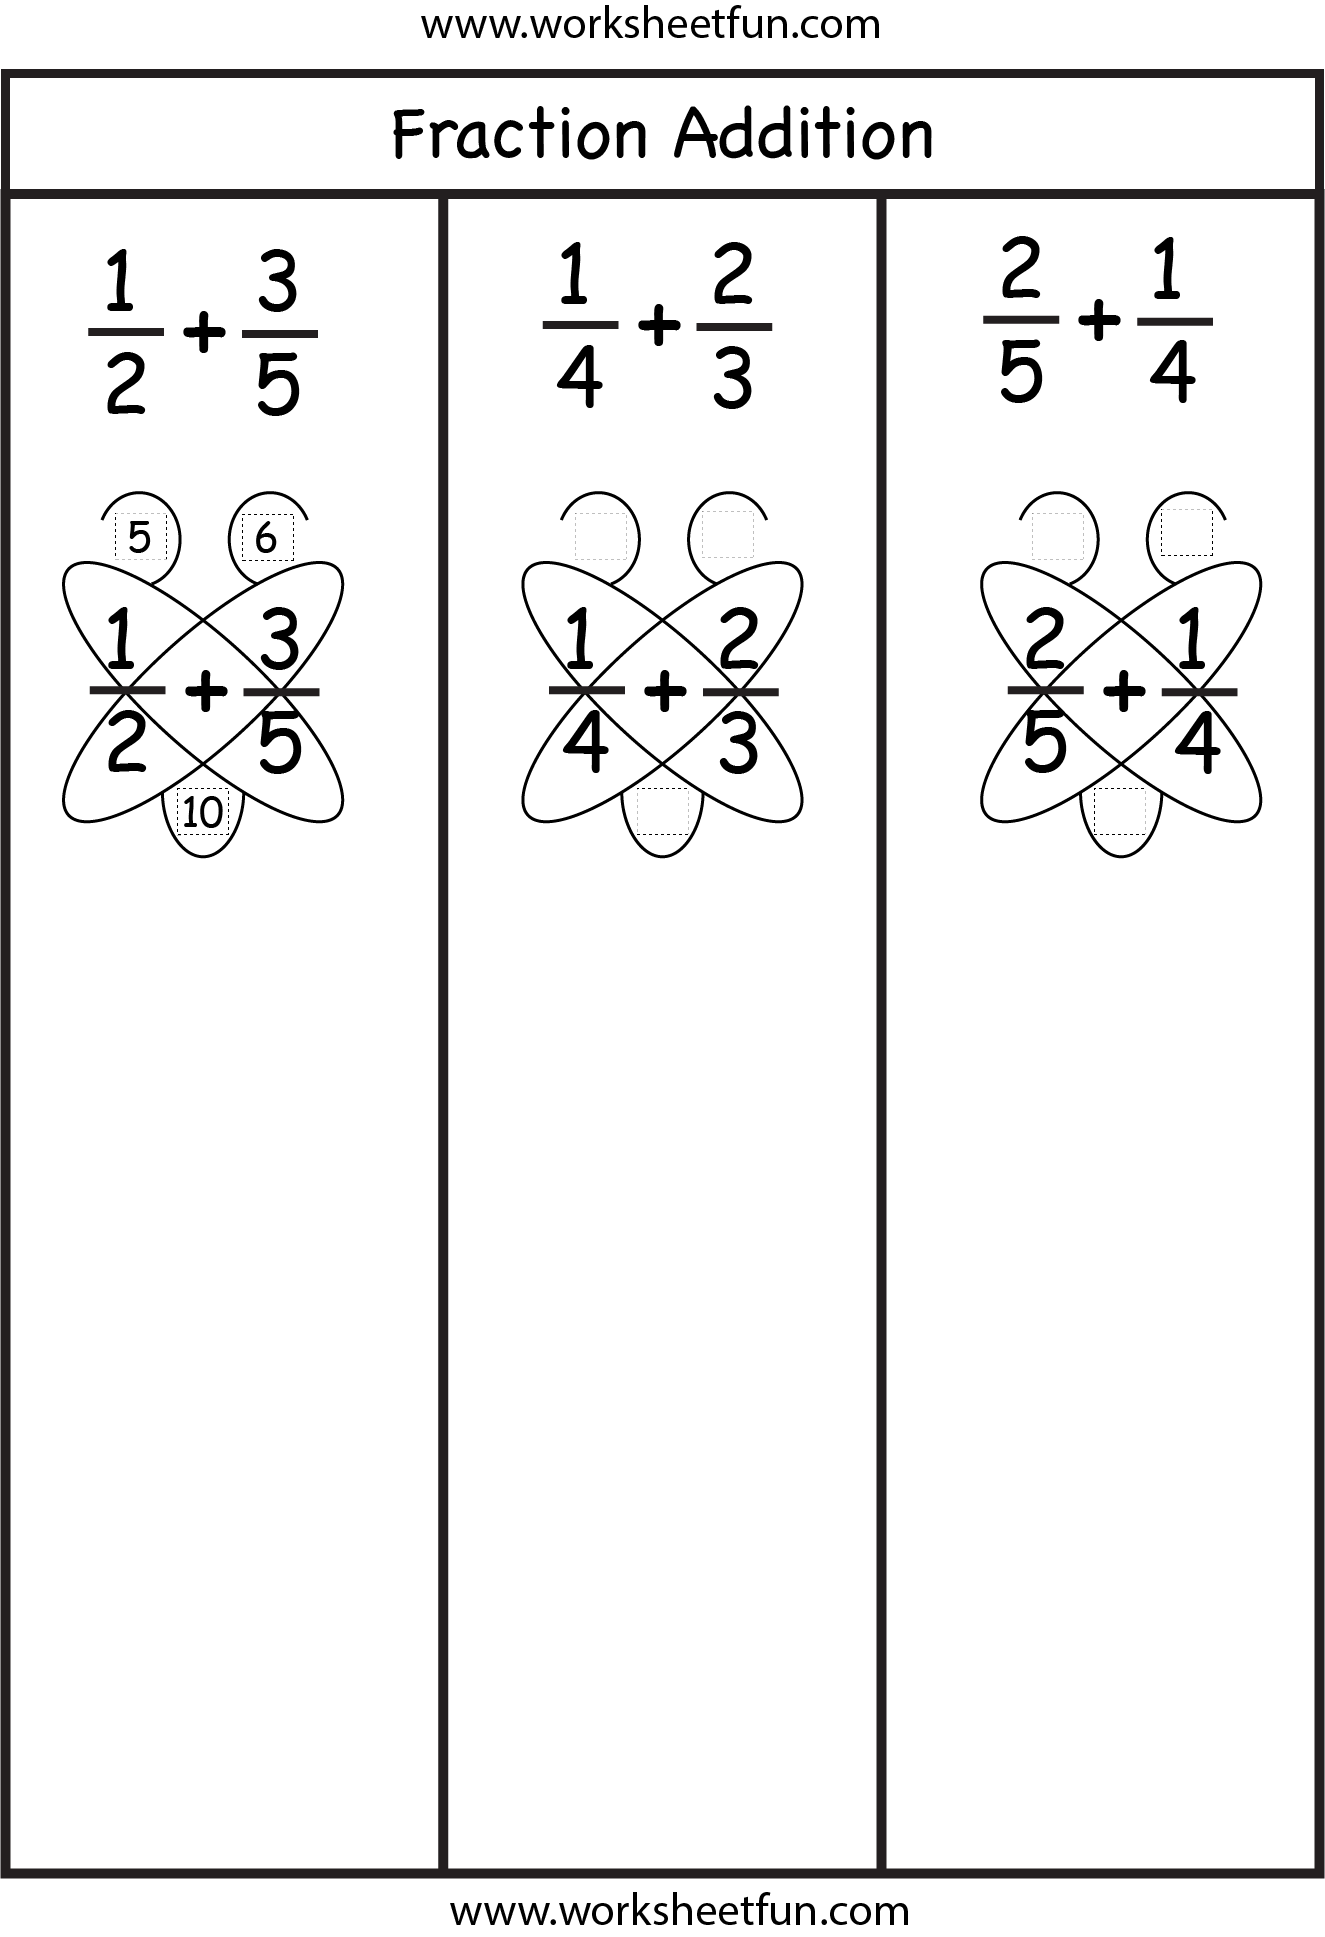 Fraction Addition Butterfly Method FREE Printable Worksheets Worksheetfun